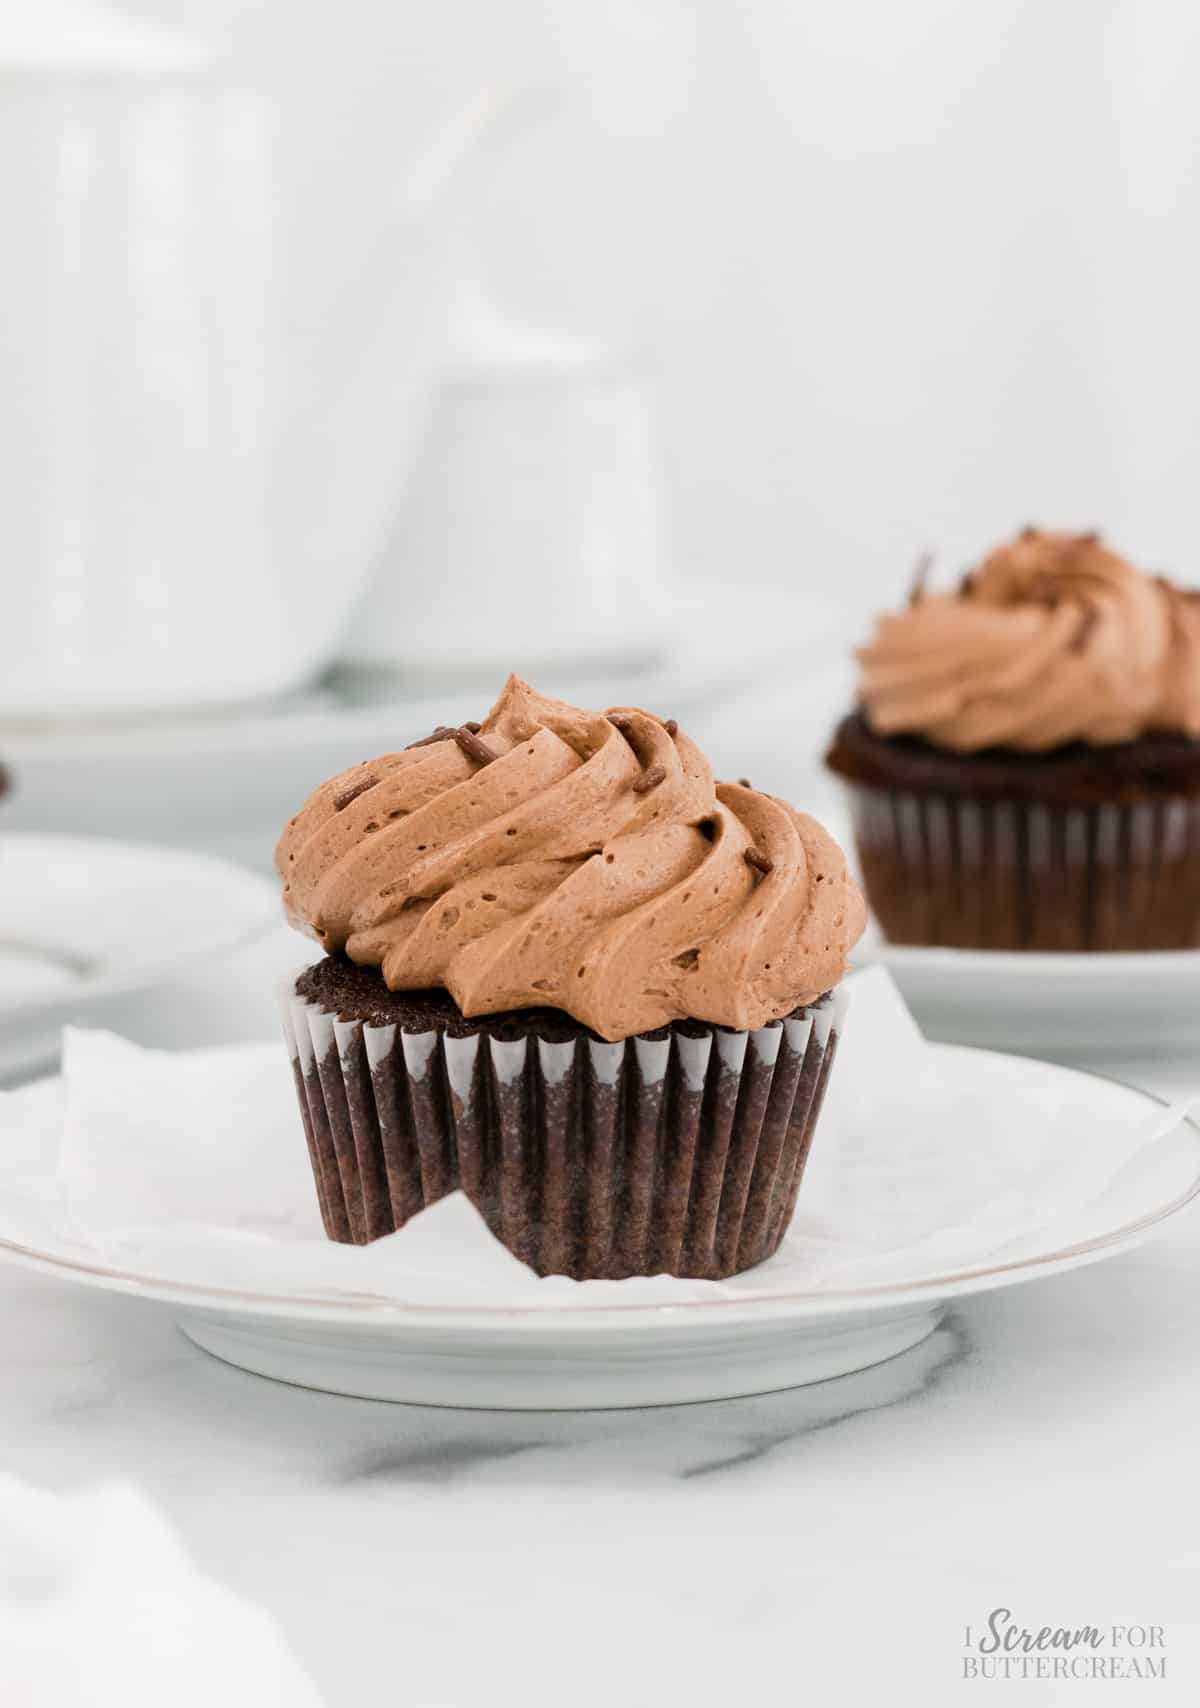 Image of chocolate mocha cupcakes on white plates.